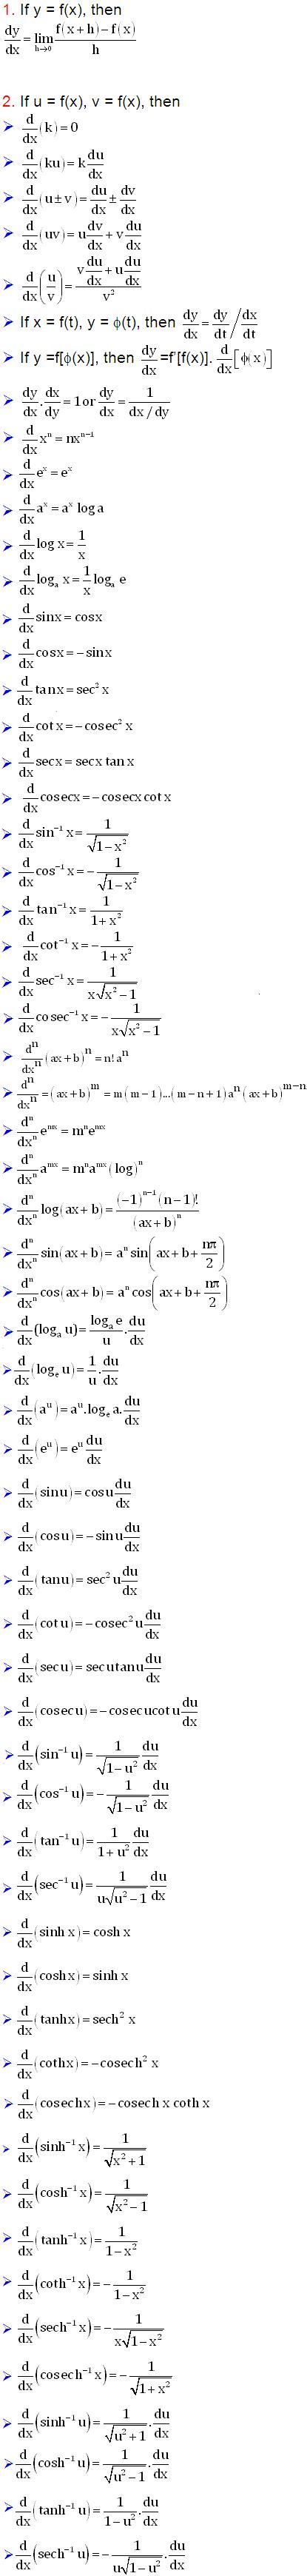 differentiation formulae math formulas mathematics formulas basic math formulas math